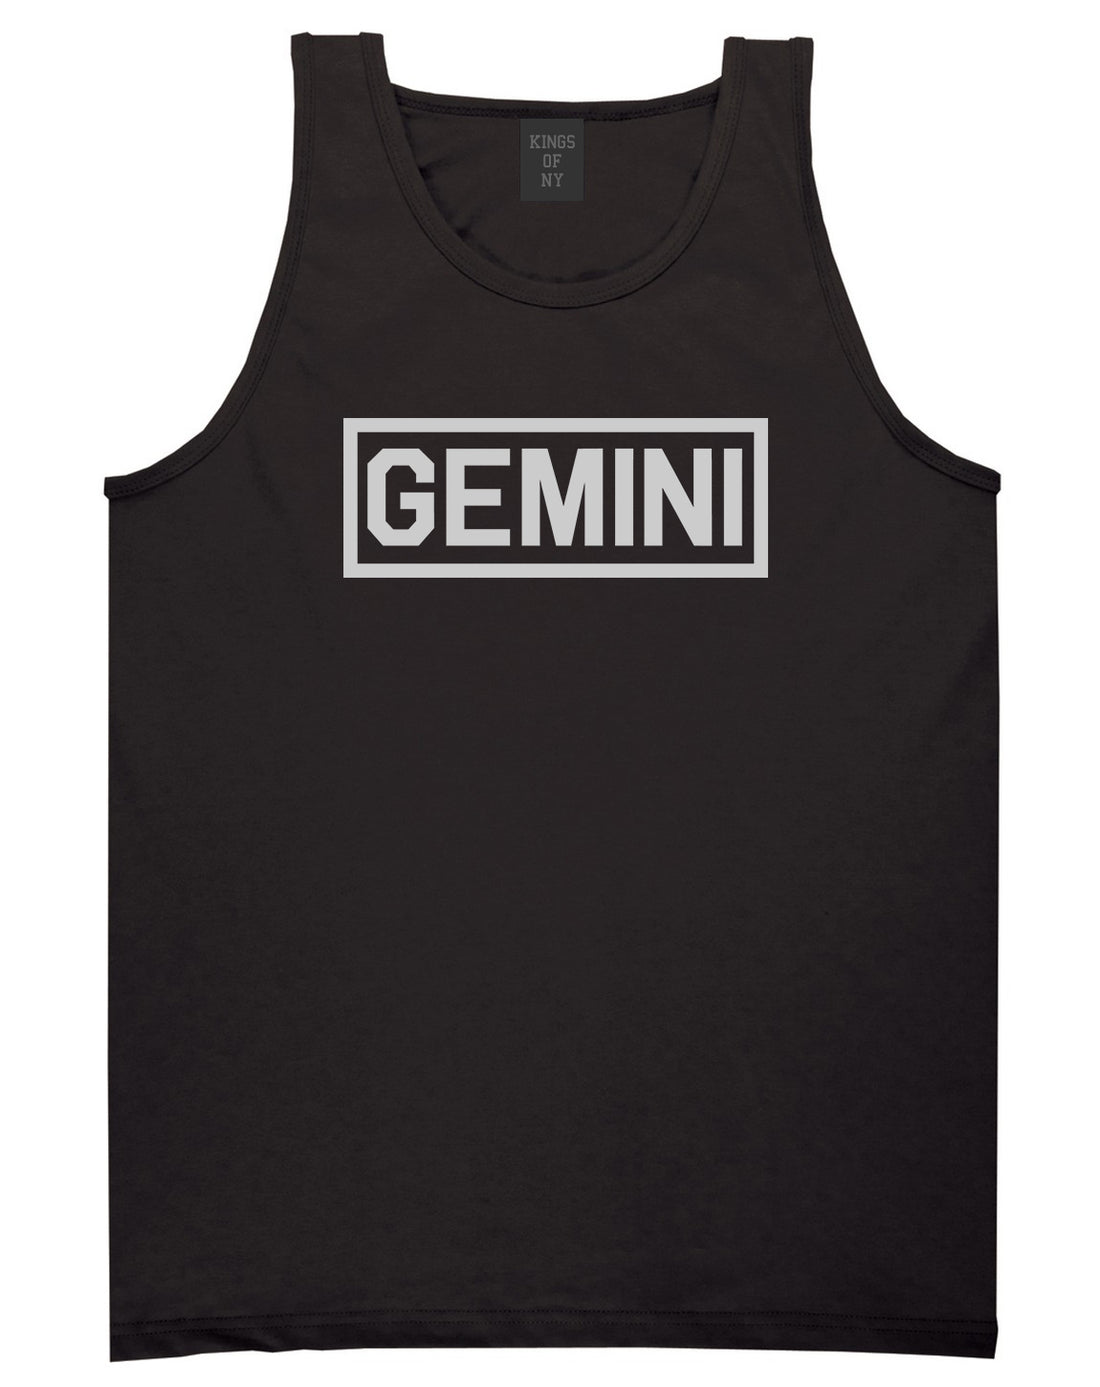 Gemini Horoscope Sign Mens Black Tank Top Shirt by KINGS OF NY